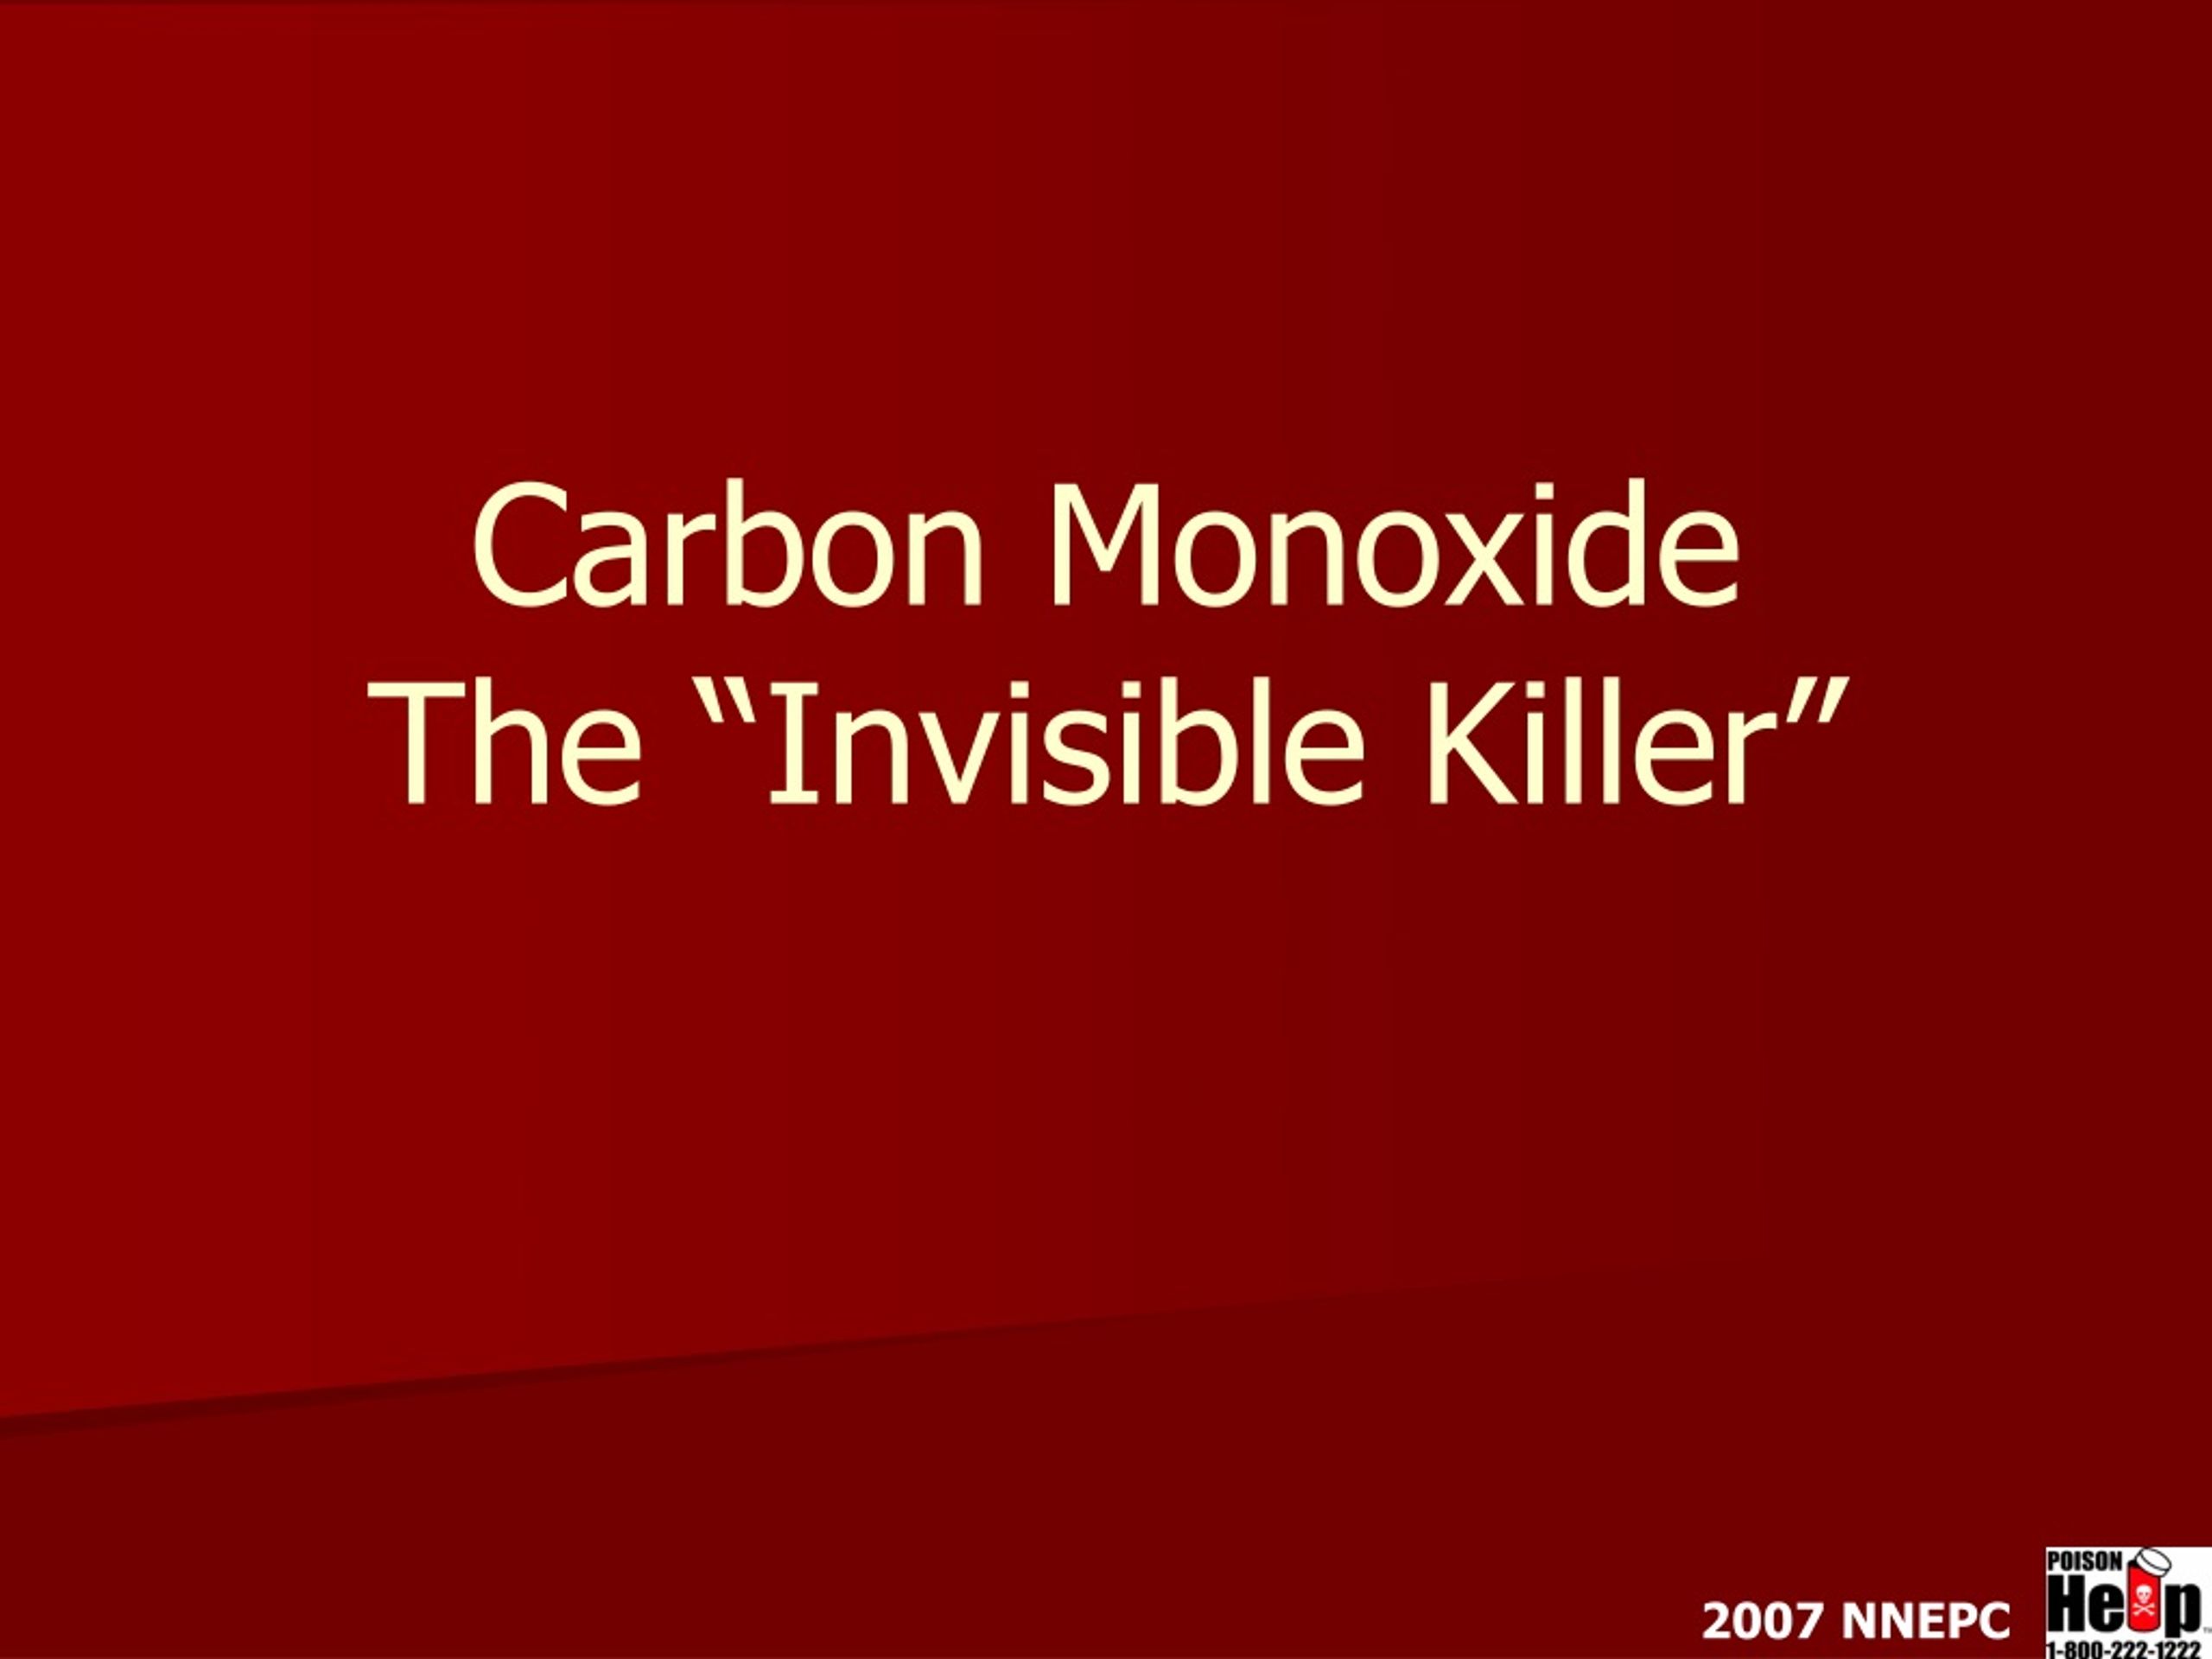 Ppt Carbon Monoxide The “invisible Killer” Powerpoint Presentation Id9173885 7386